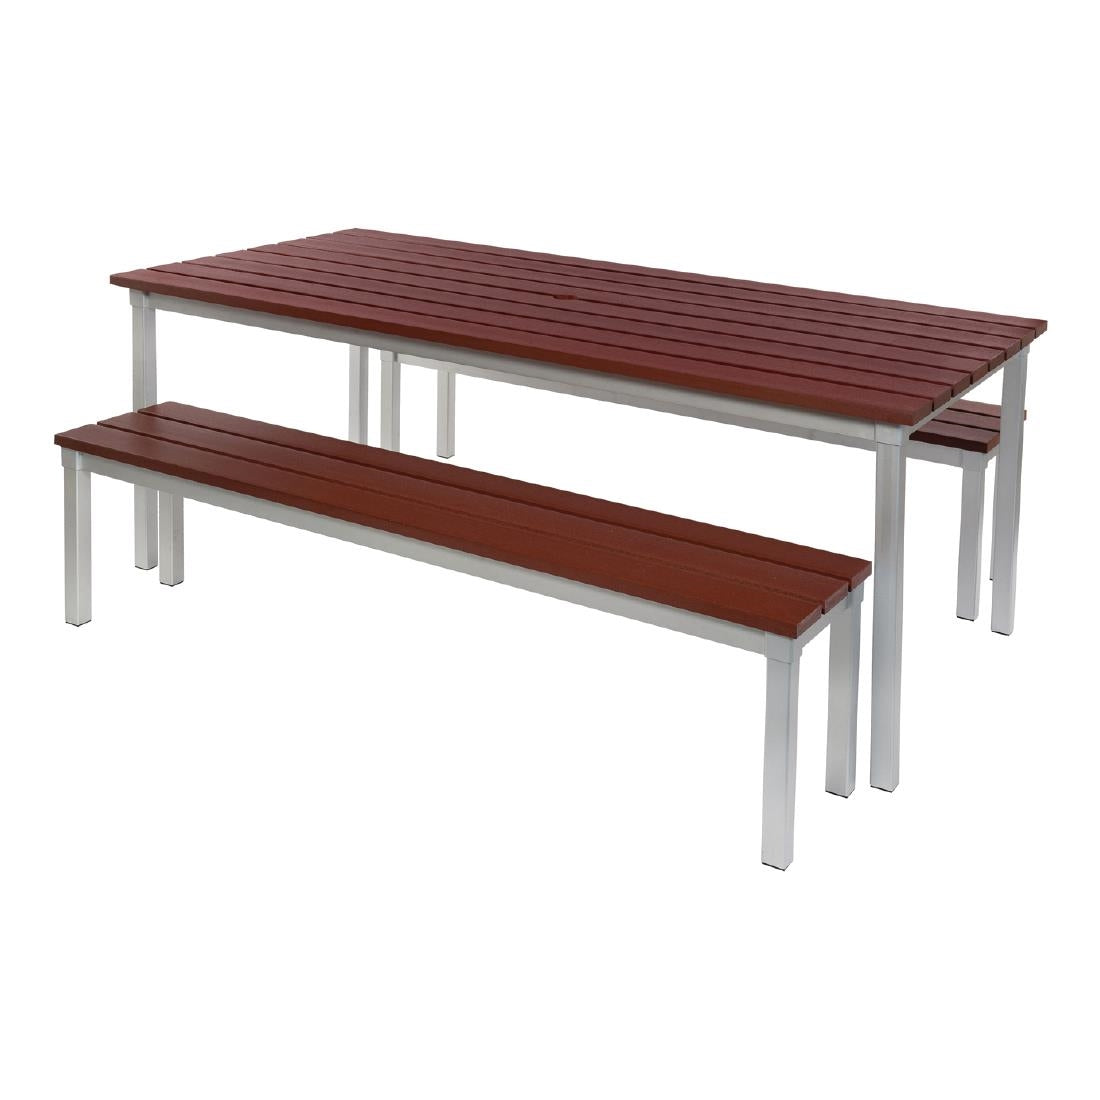 GoPak Enviro Outdoor Walnut Effect Faux Wood Table 1800mm JD Catering Equipment Solutions Ltd